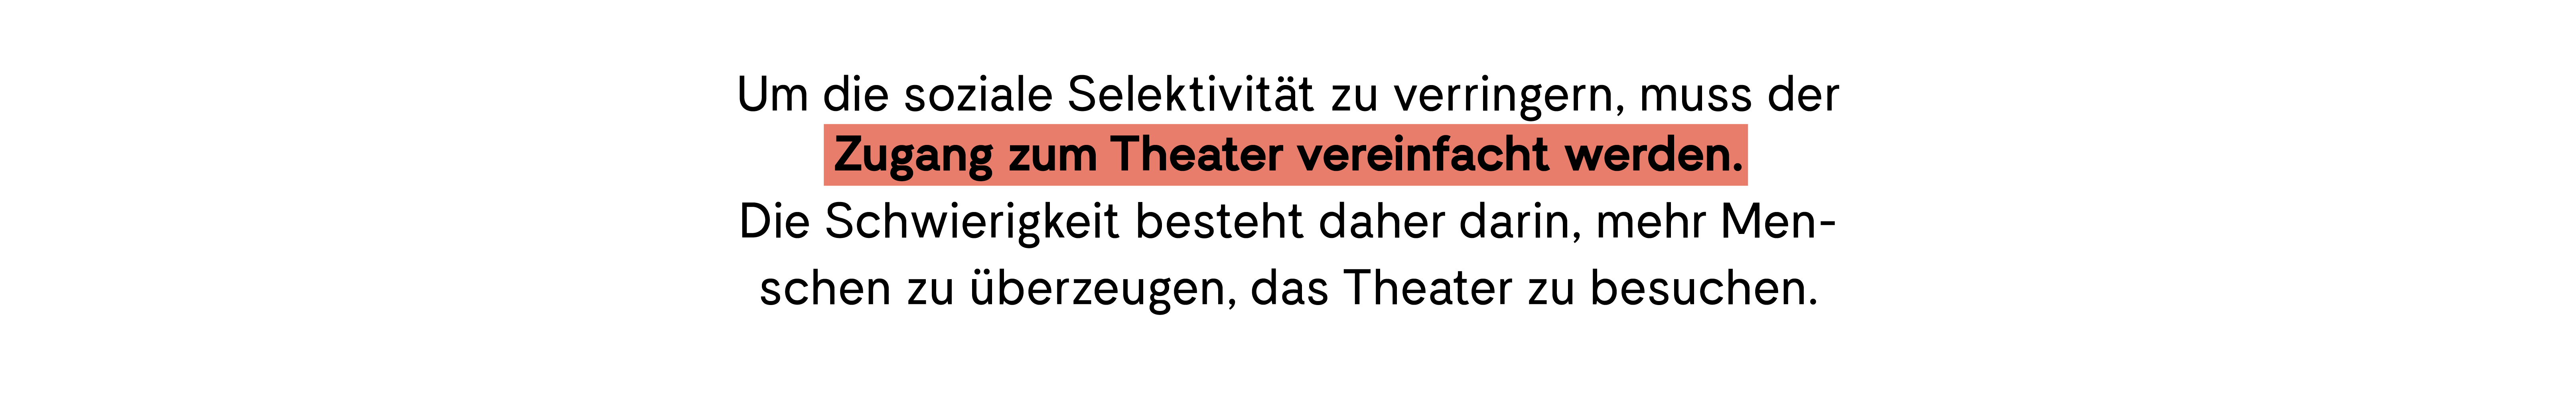 Staatstheater_Darmstadt_Rebranding_Schwierigkeiten3